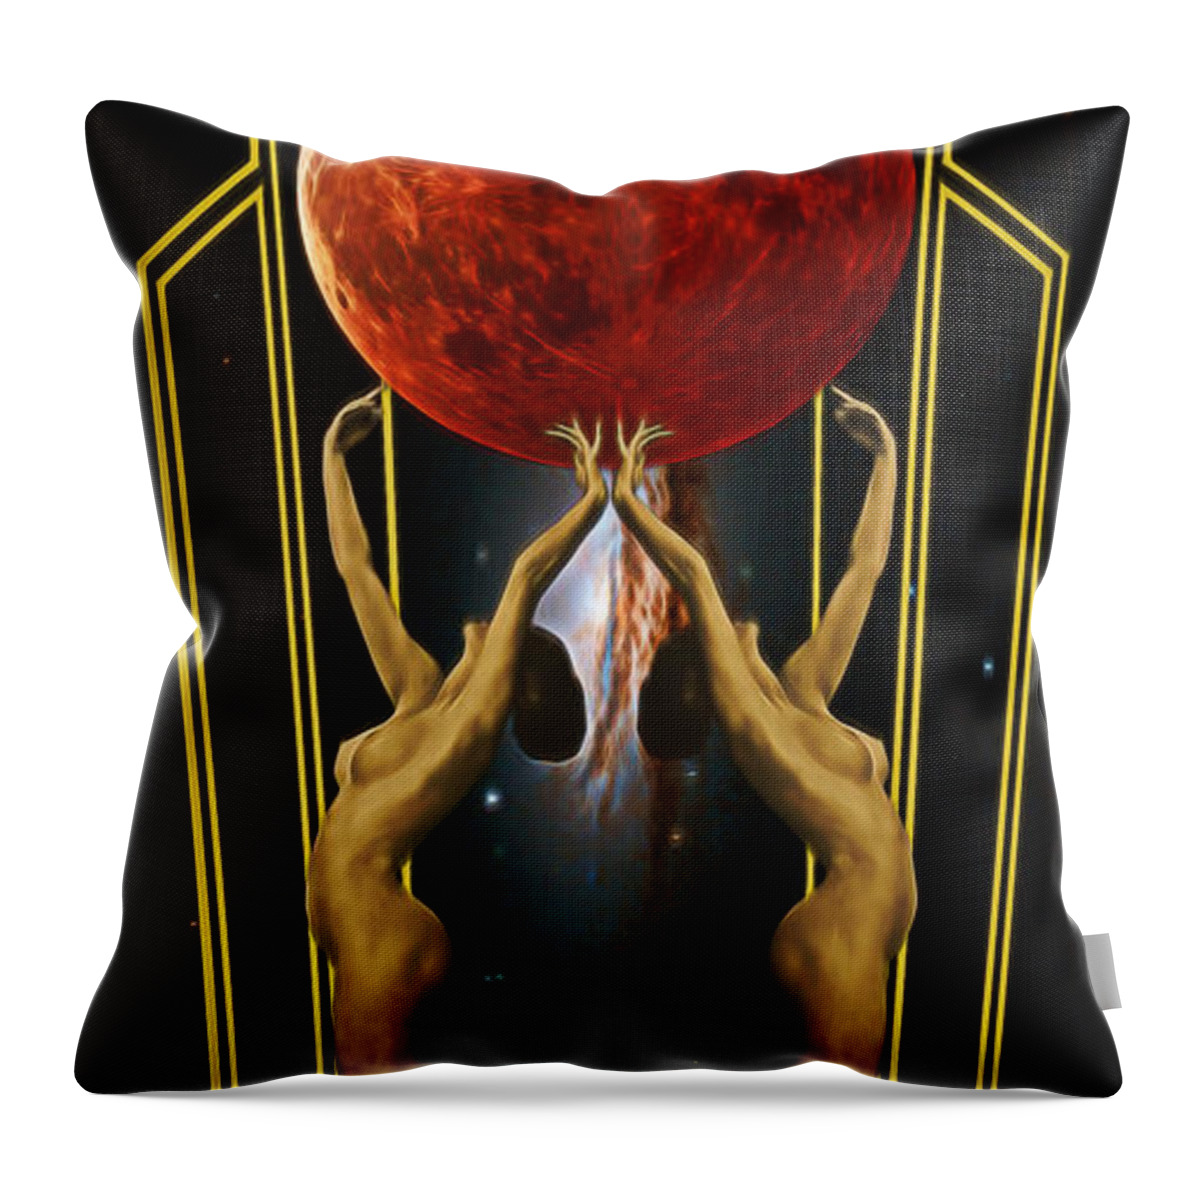 Art Deco Throw Pillow featuring the digital art Art Deco Meets the 21st Century by John Haldane